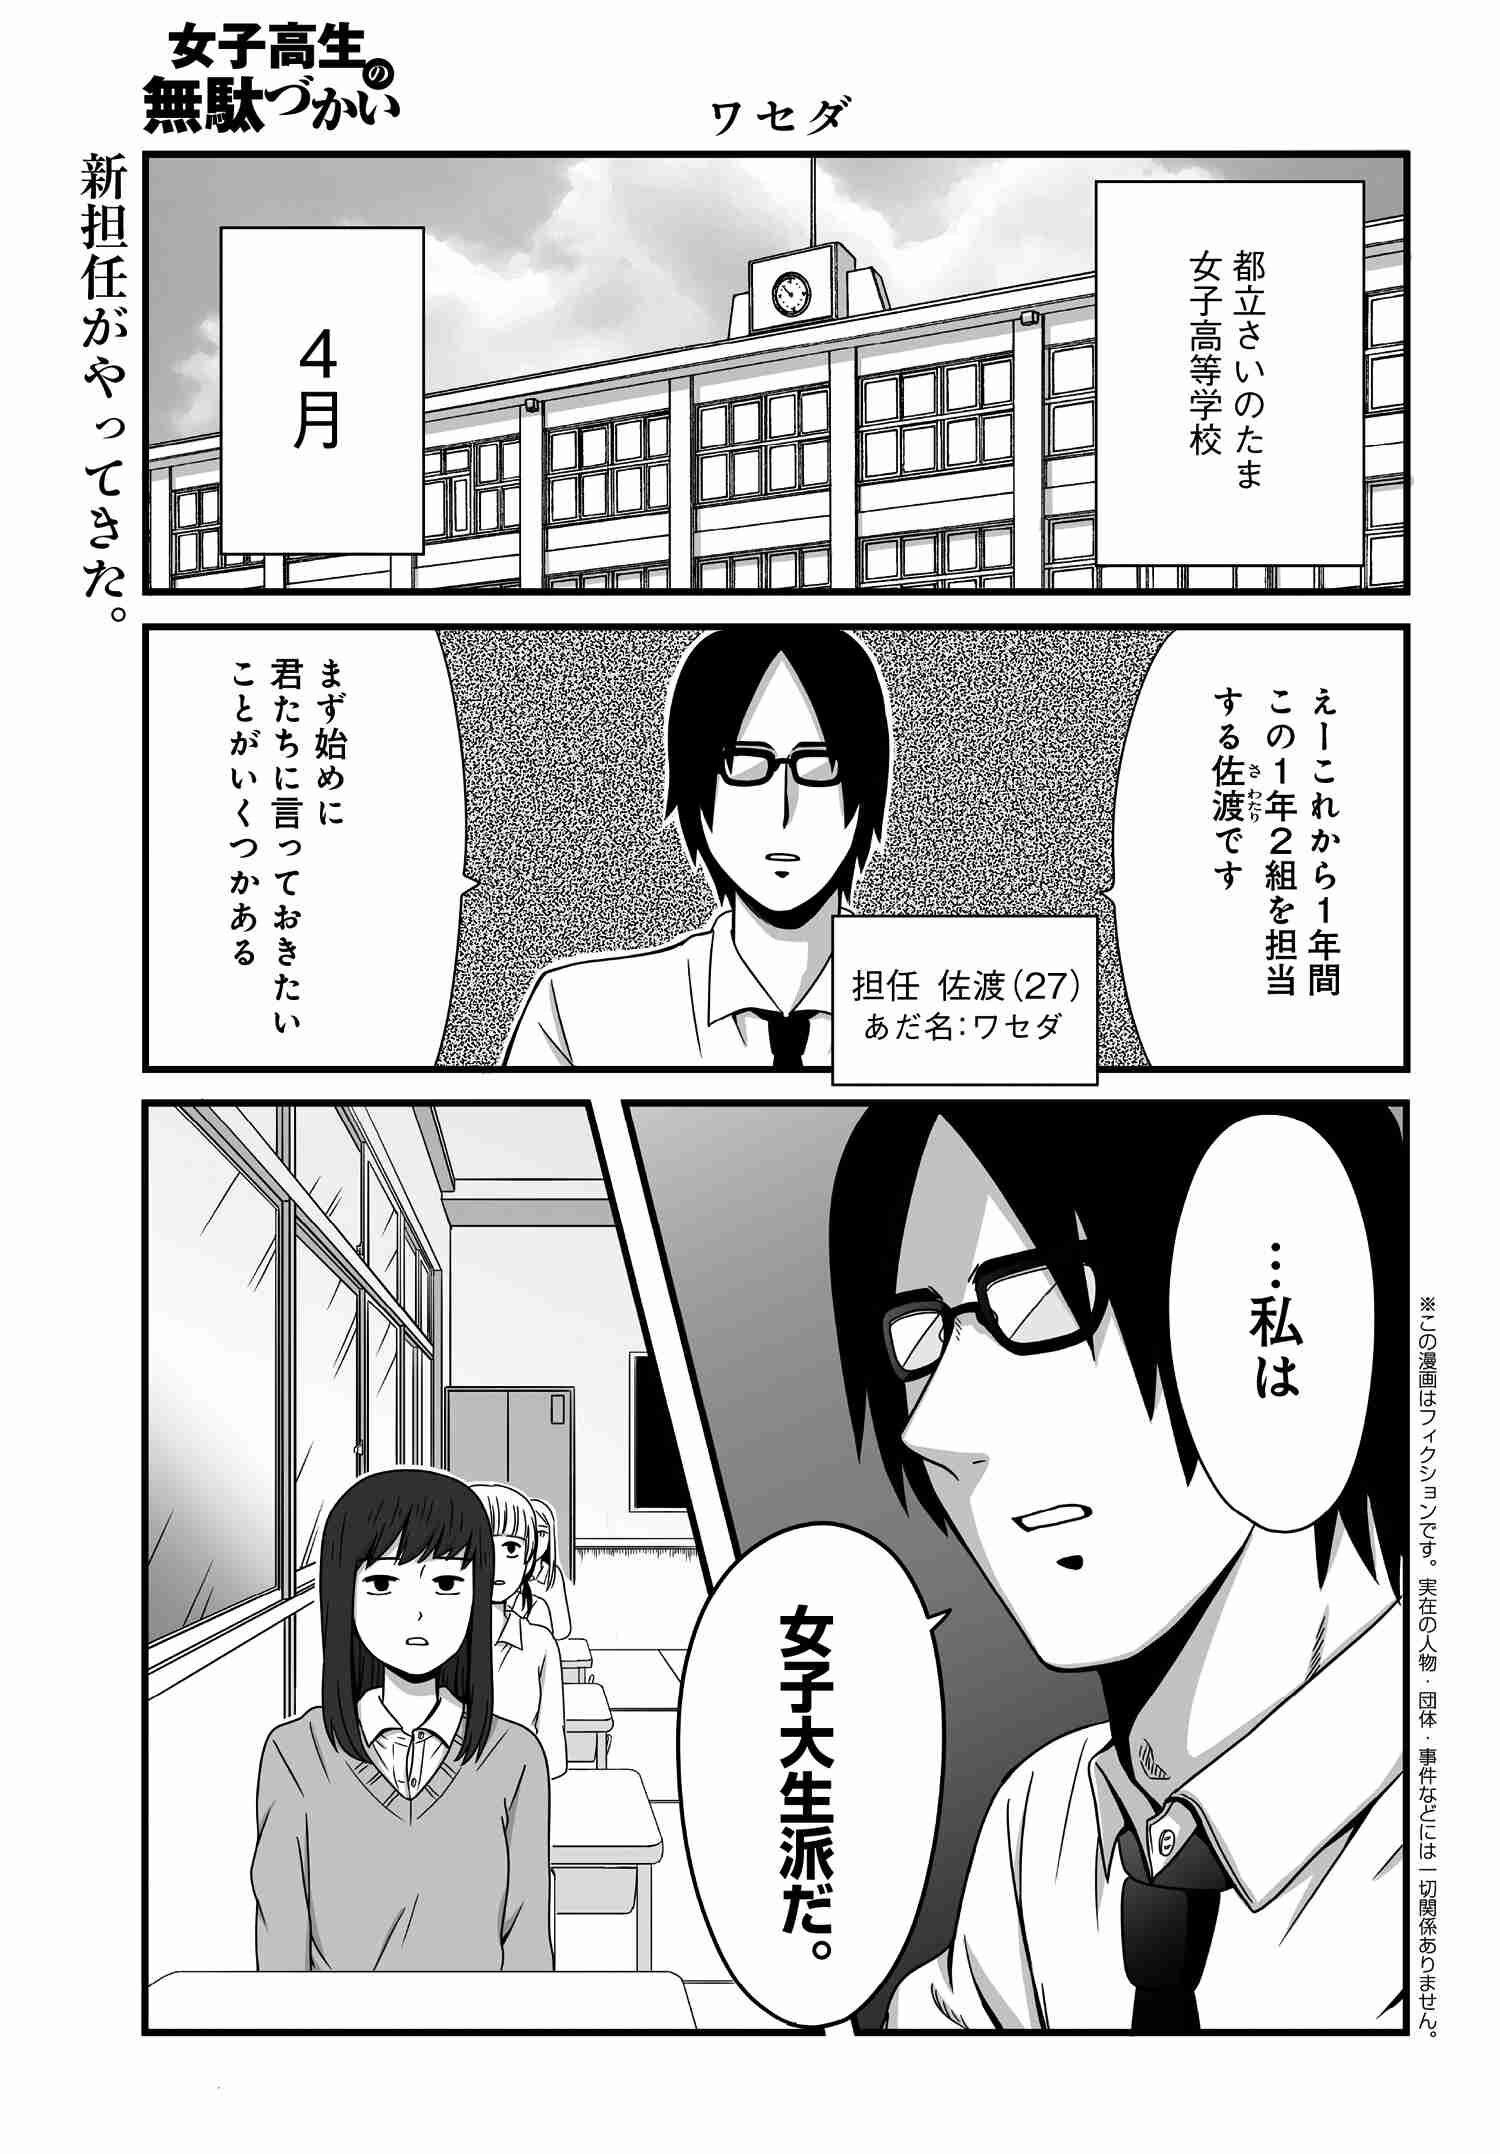 Joshikousei no Mudazukai - Chapter 009 - Page 1